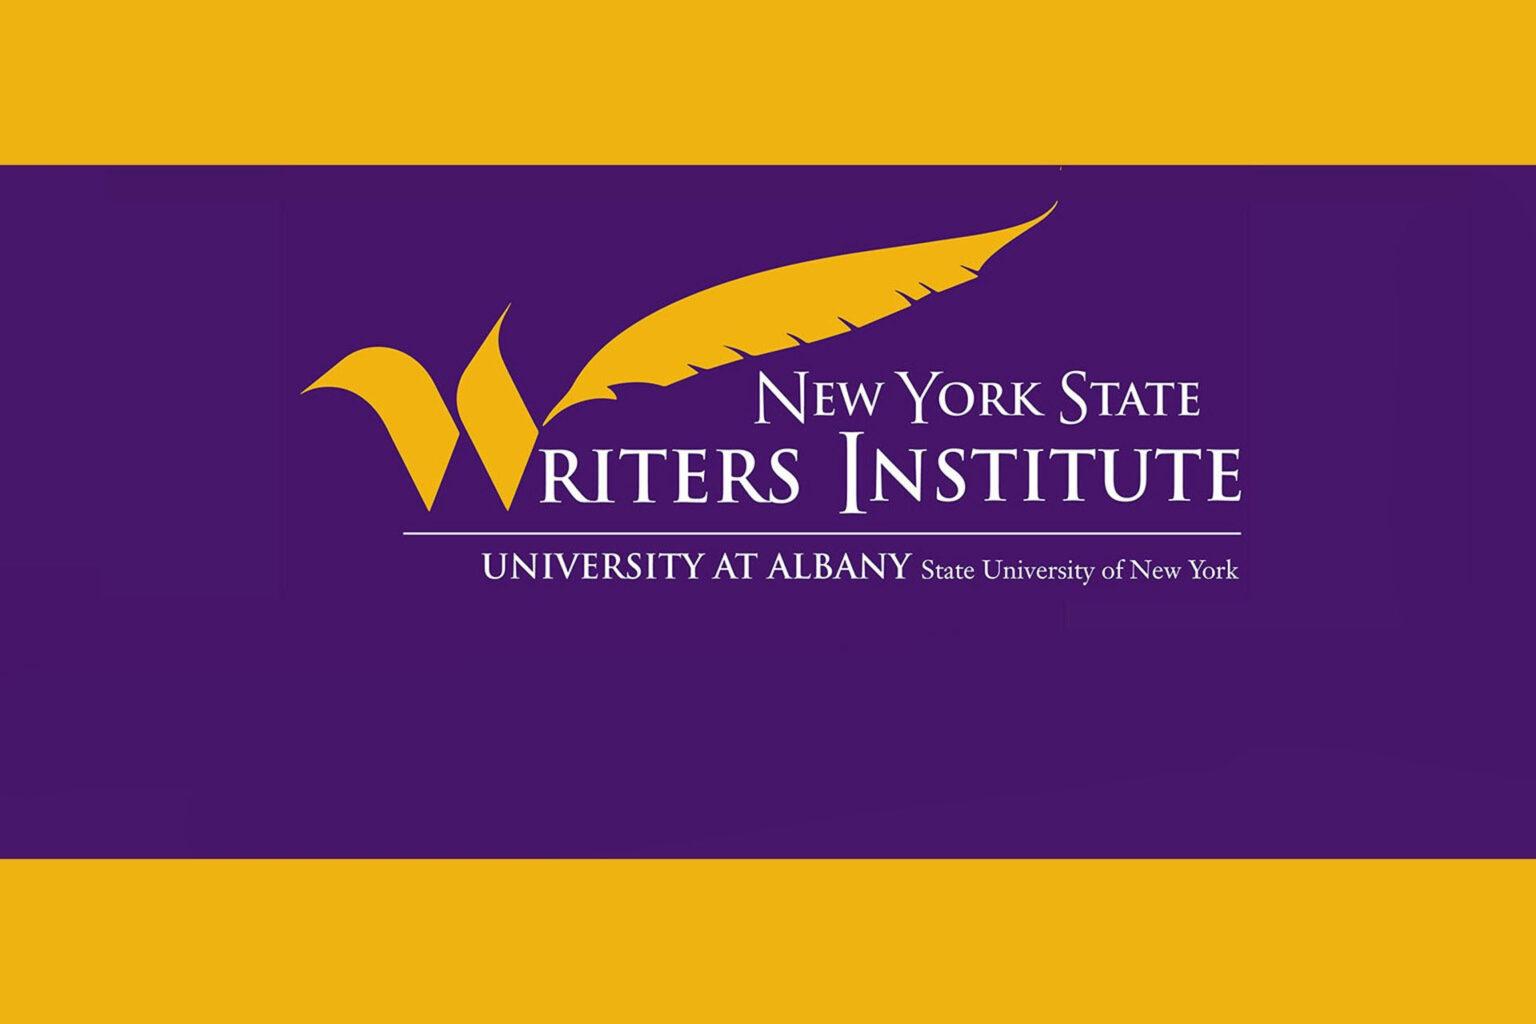 NYS Writers Institute 1536x1024 